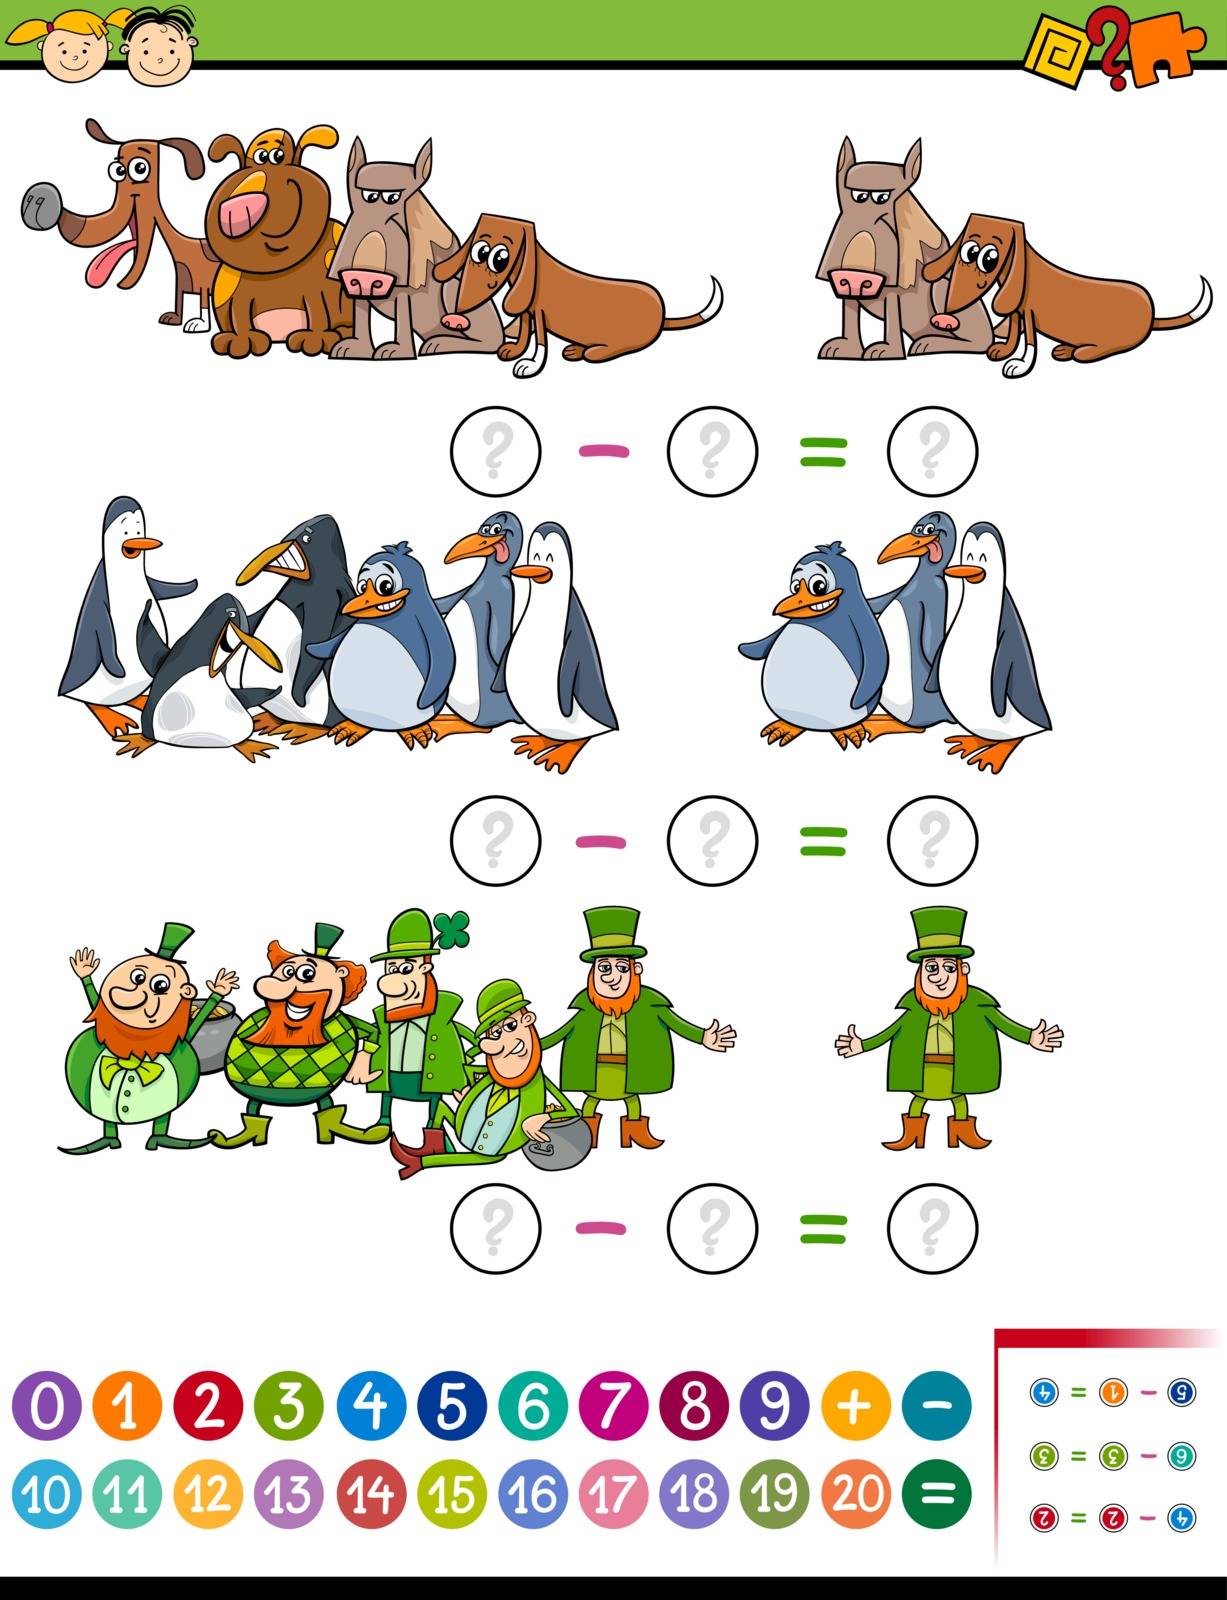 Cartoon Illustration of Education Mathematical Subtraction Task for Preschool Kids